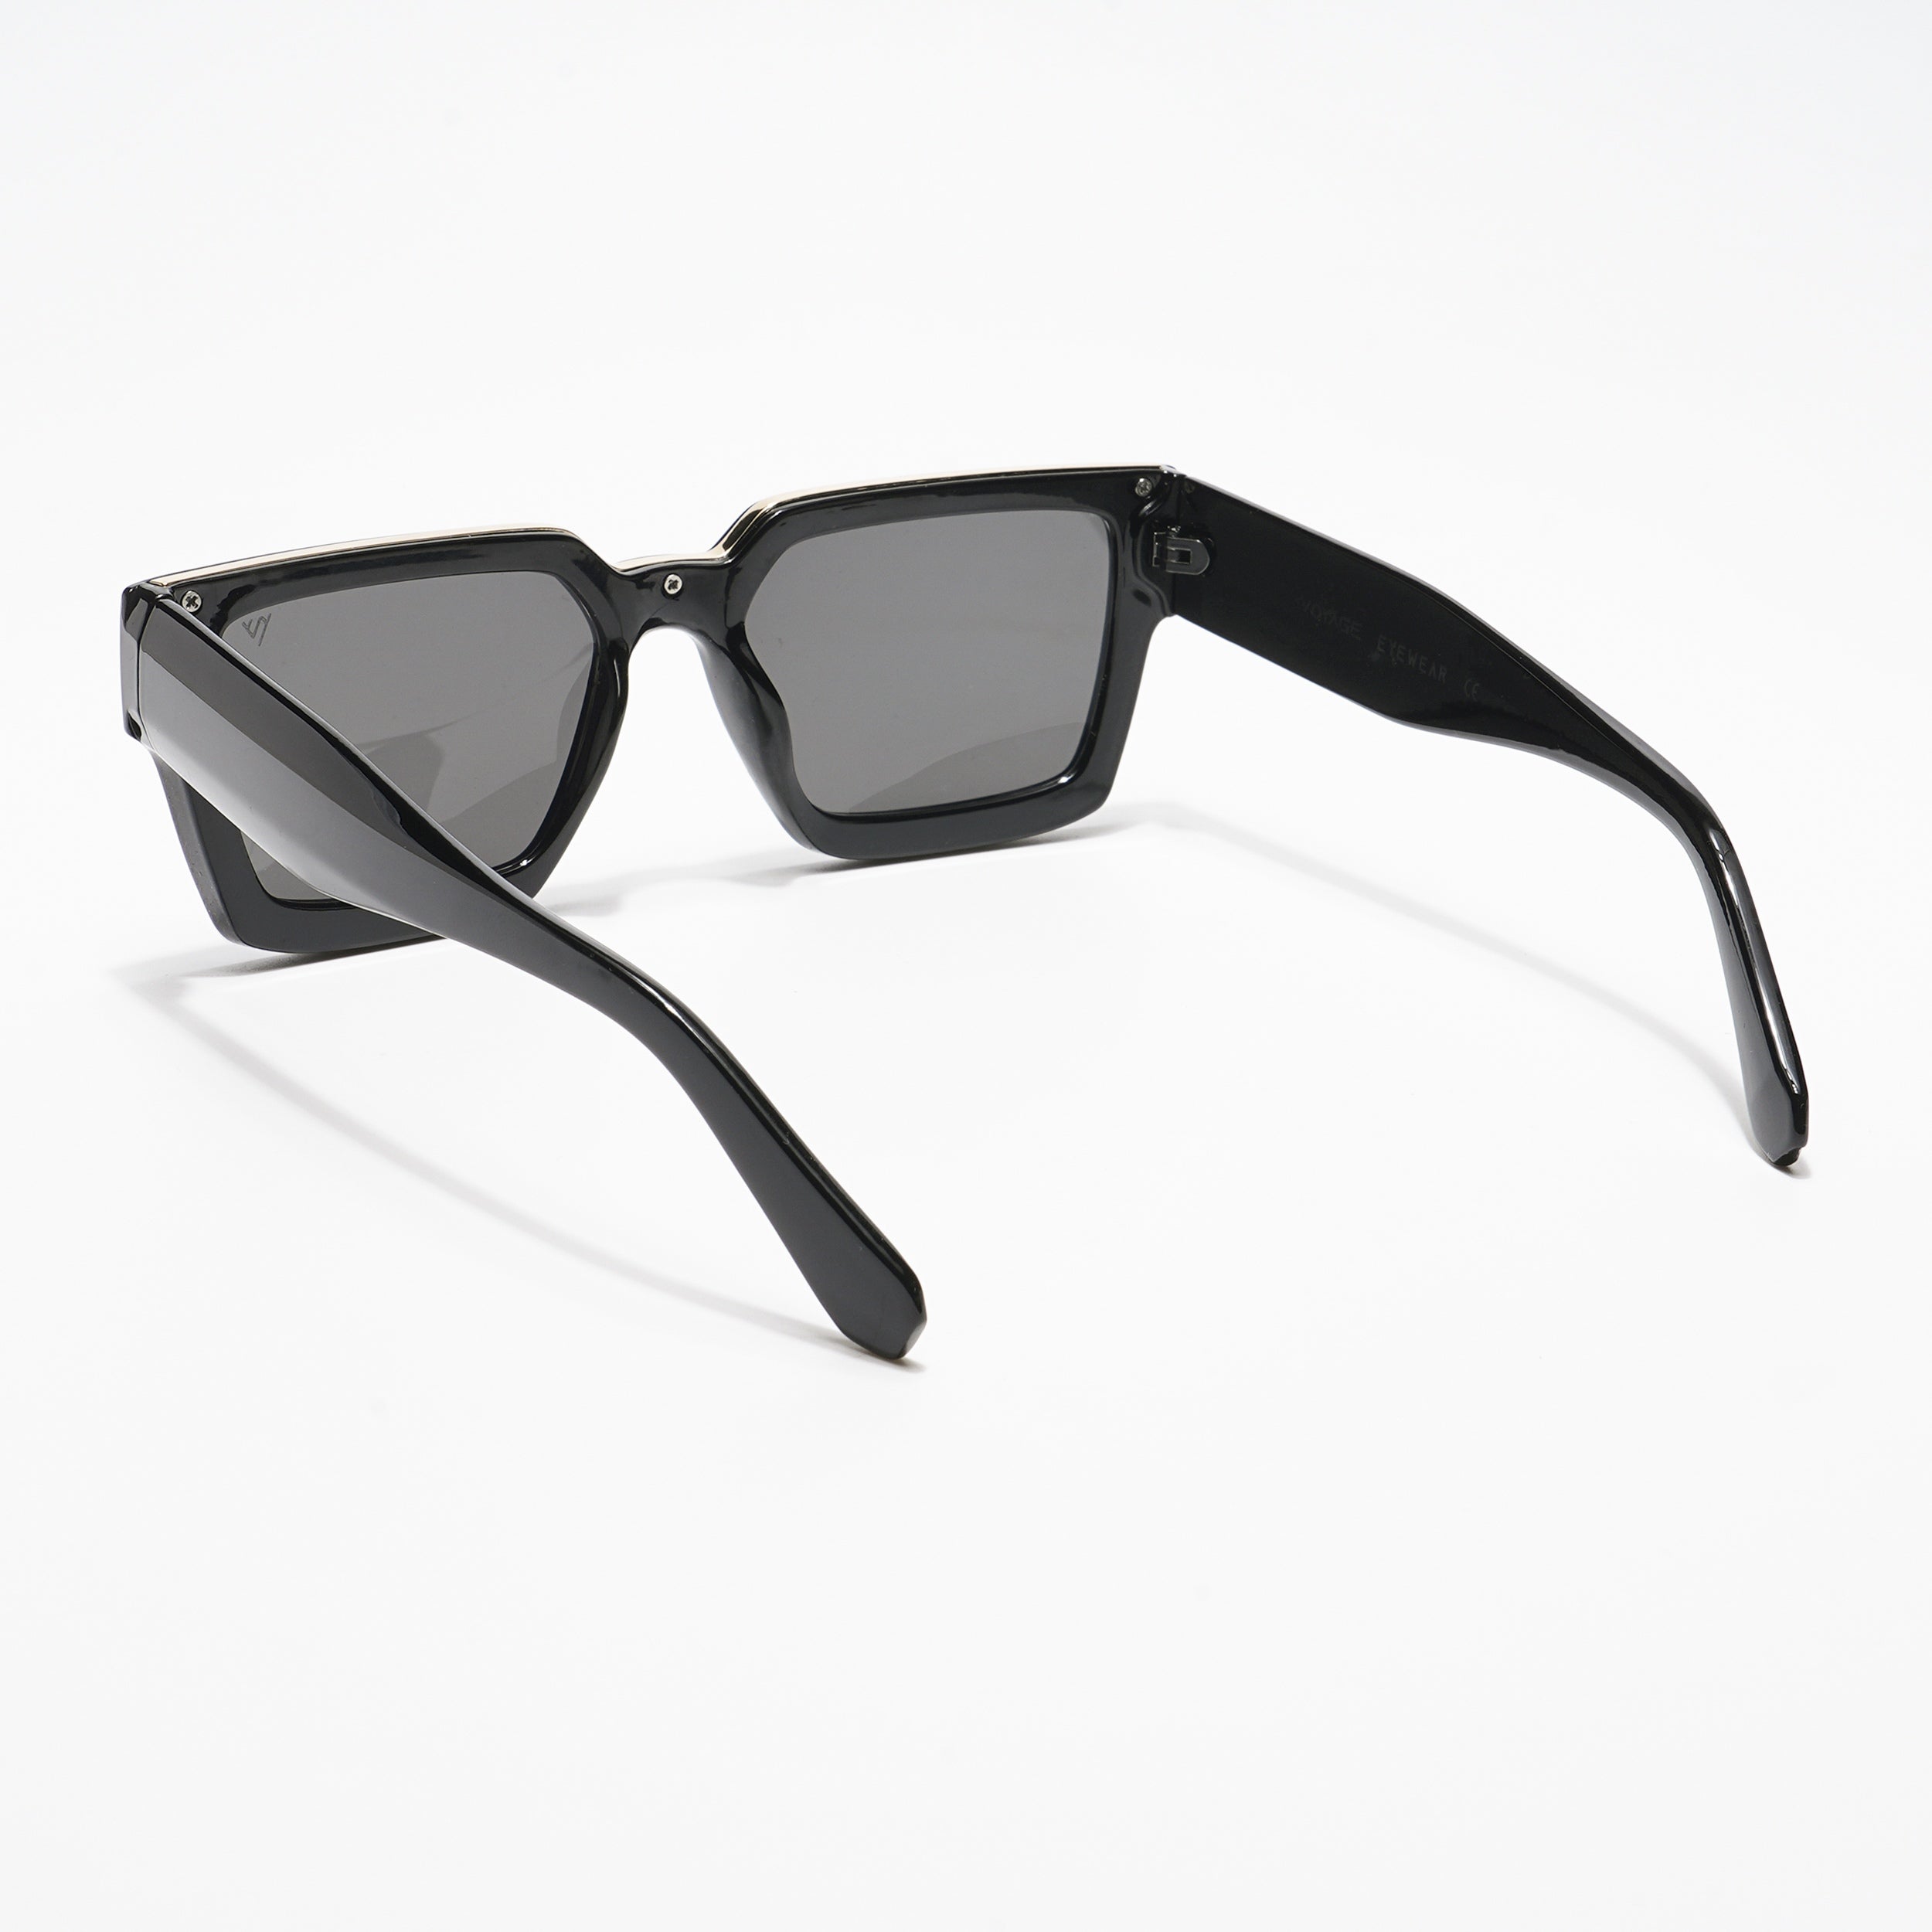 Voyage Phantom | Black Wayfarer Sunglasses - MG3669